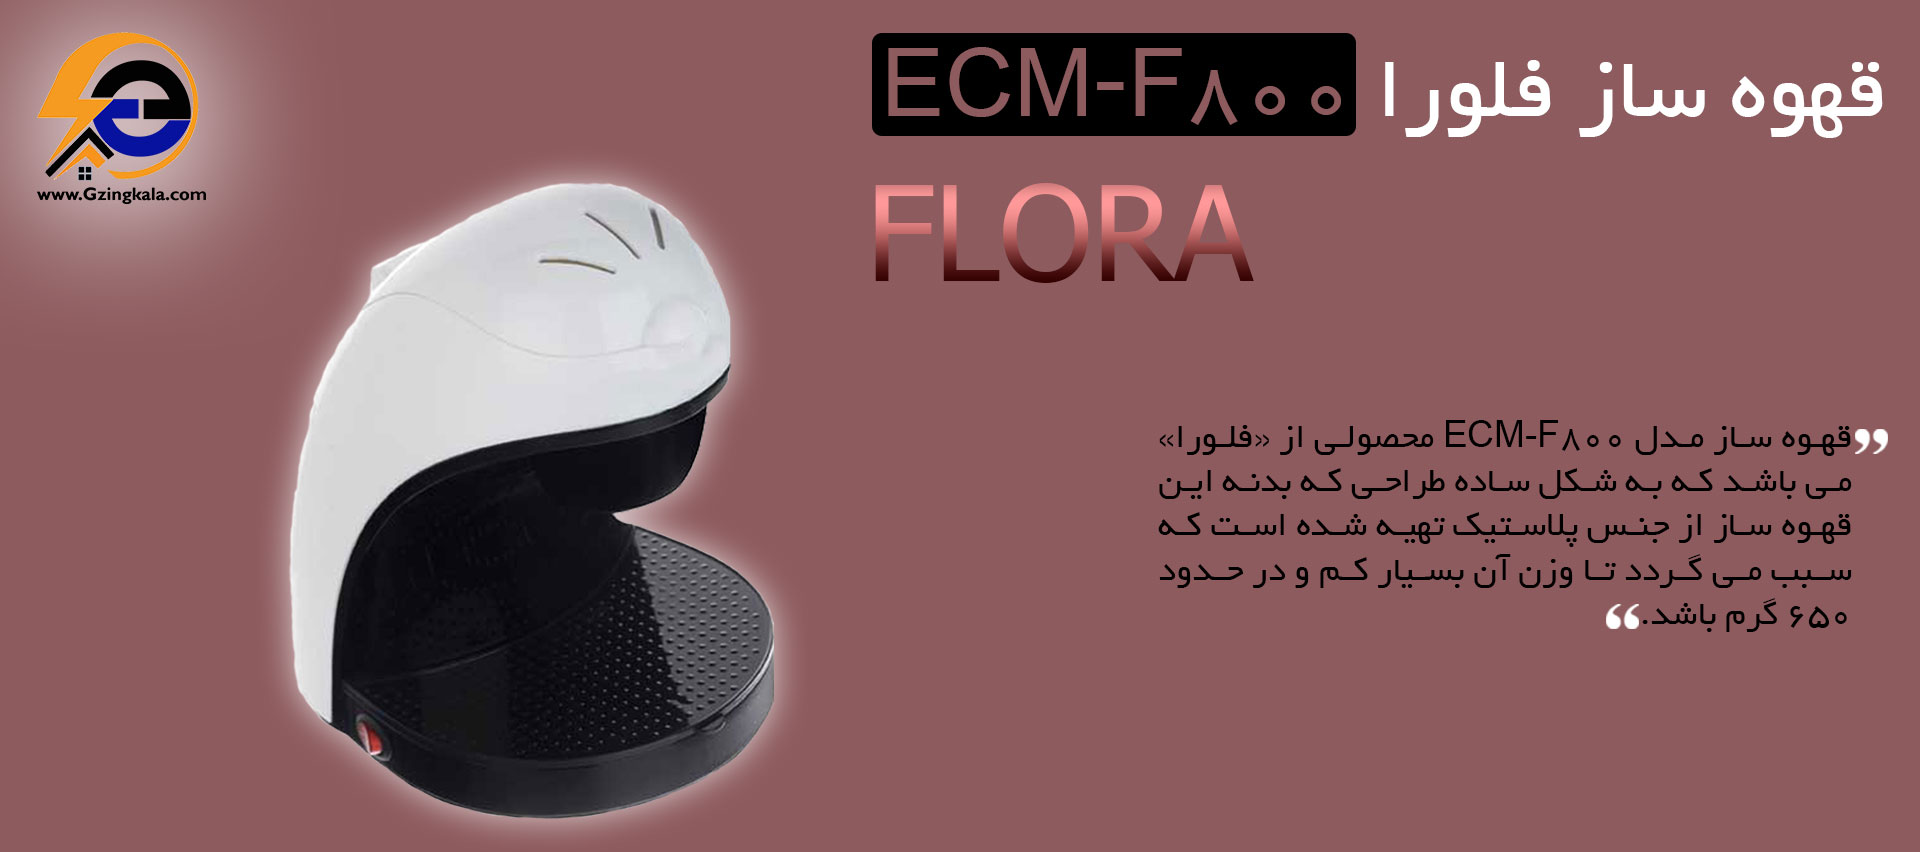 قهوه ساز فلورا ECM-F800